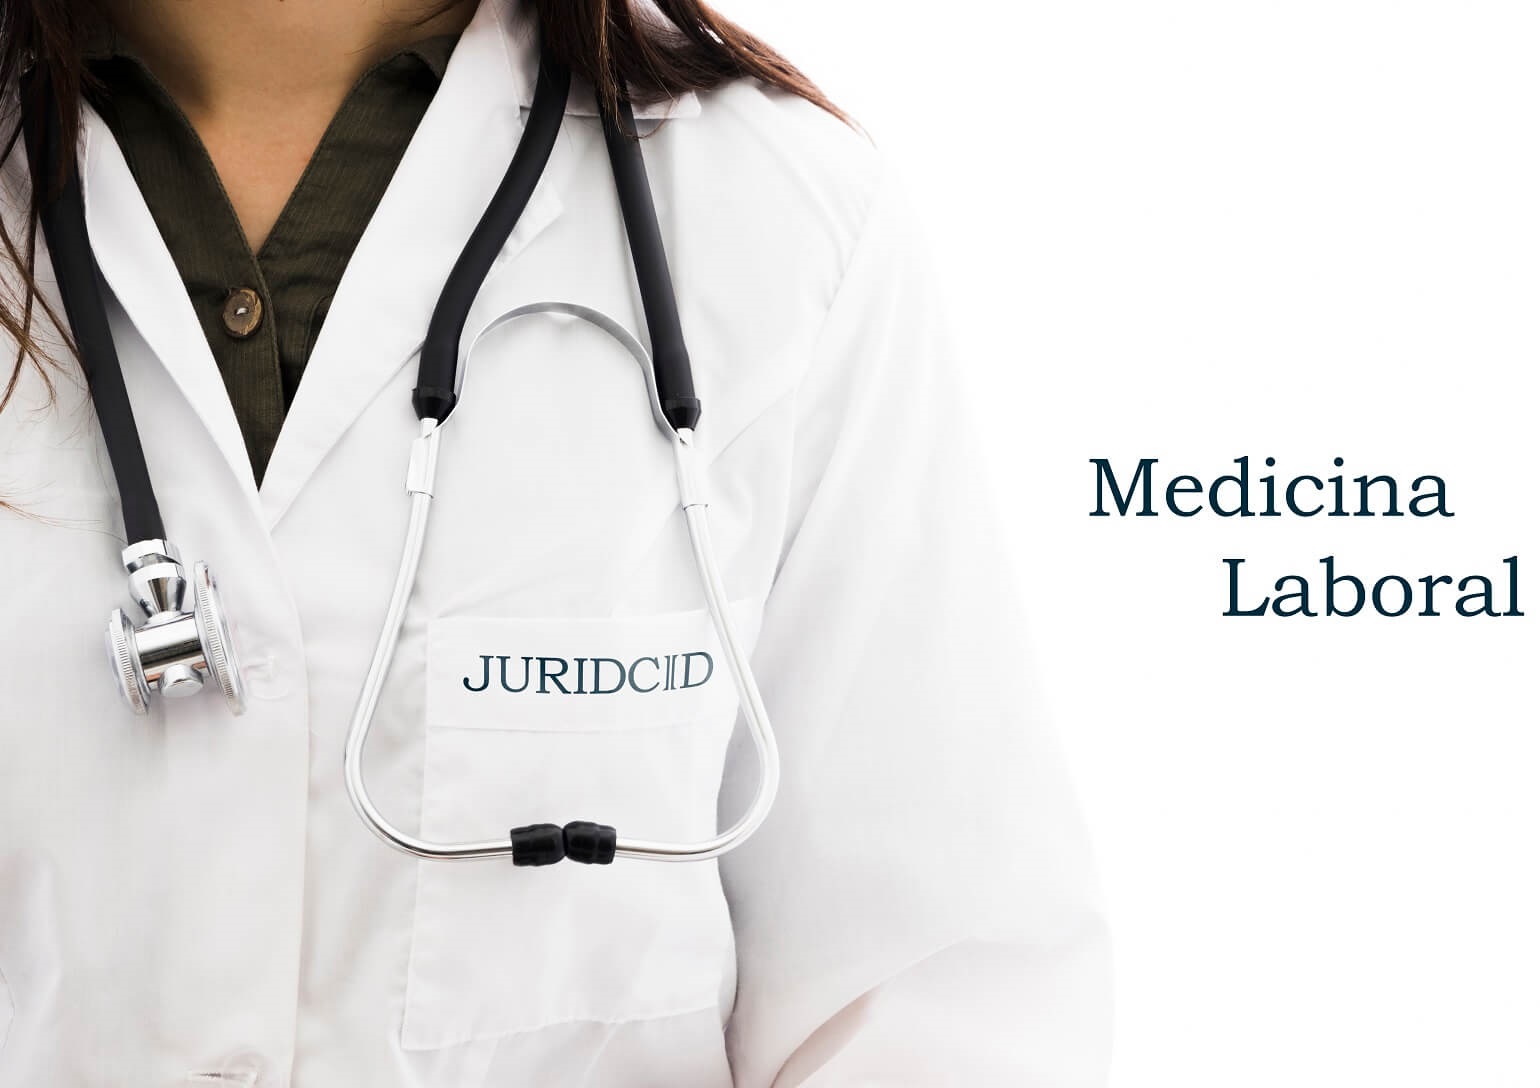 Medico Laboral Juridcid